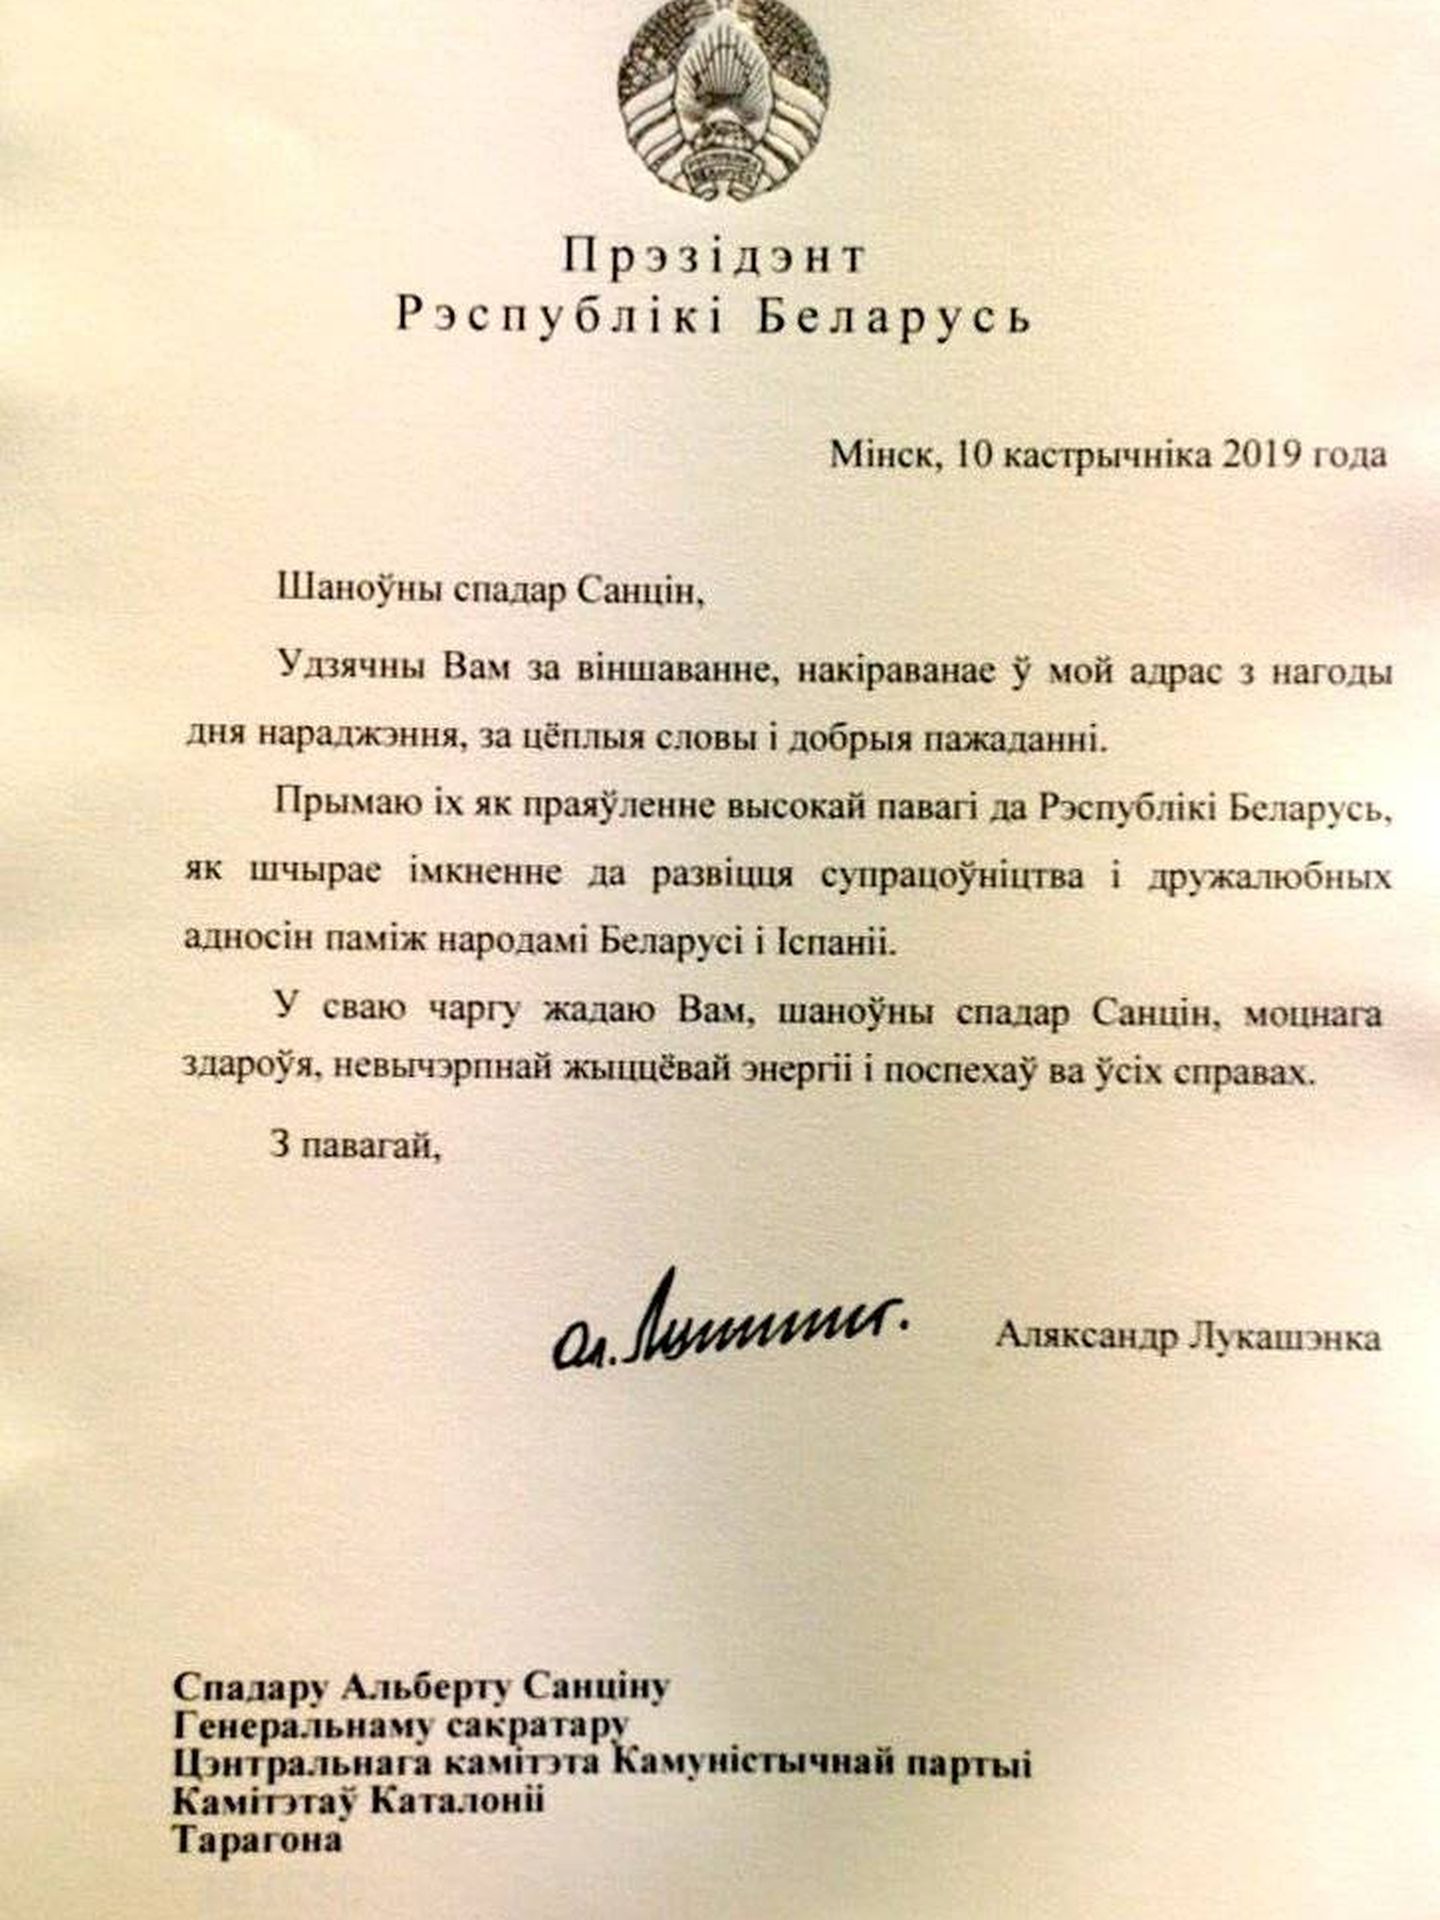 Carta remitida a Santin firmada por el presidente Lukashenko.